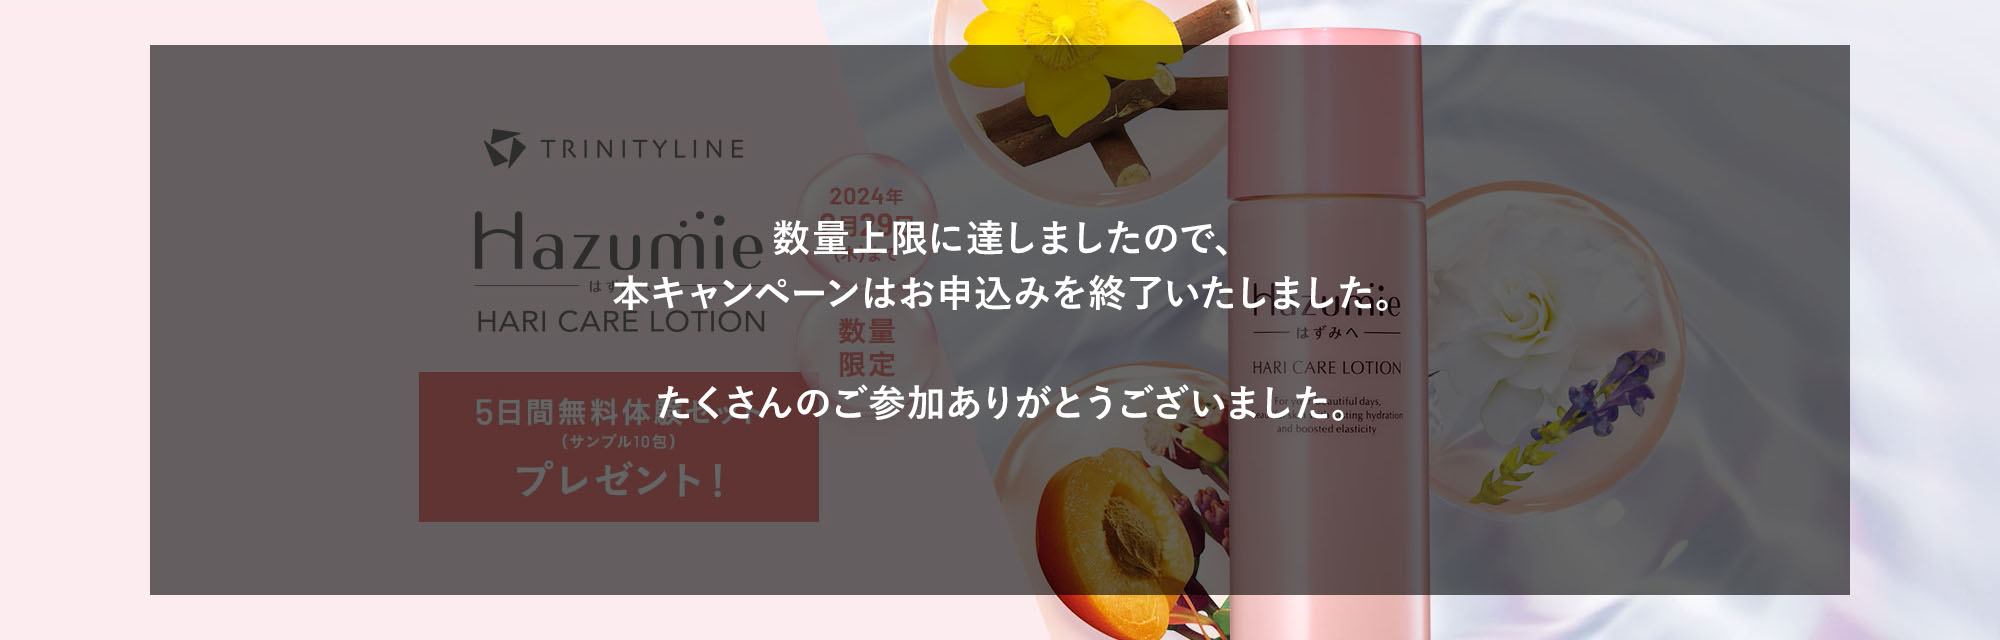 TRINITYLINE Hazumie - はずみへ - ハリケアローション 5日間無料体験セット(サンプル10包)プレゼント！